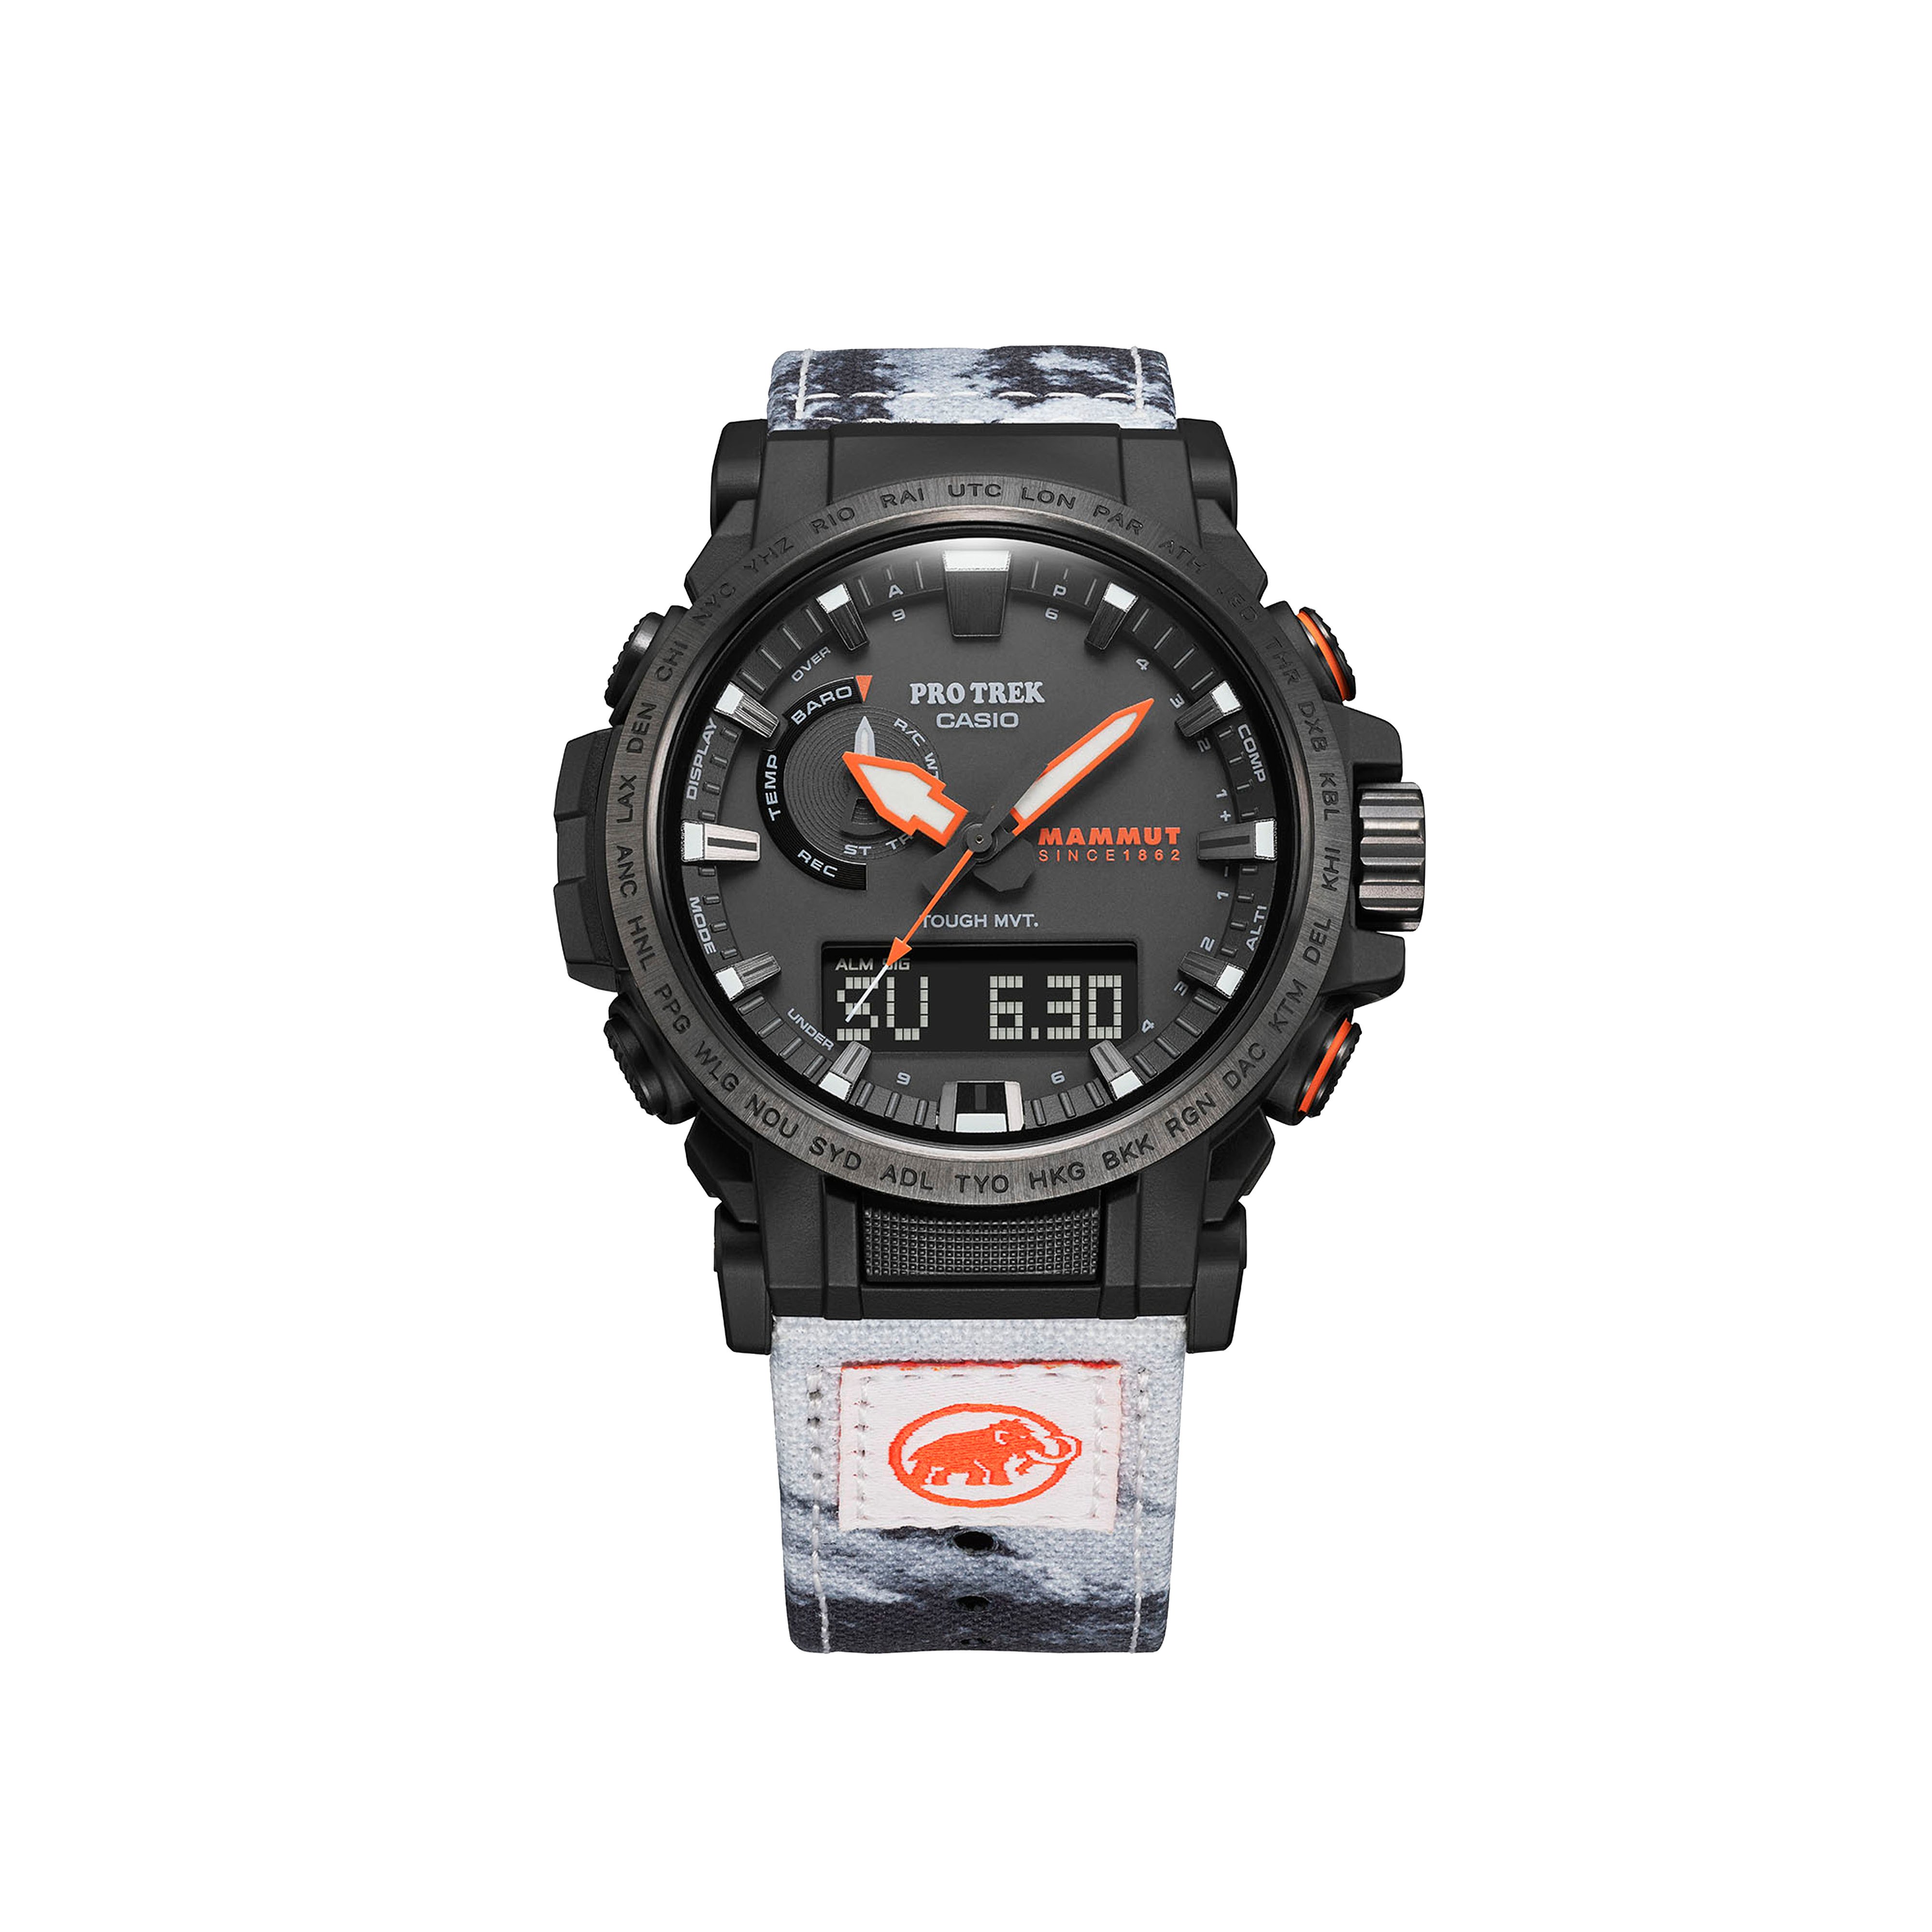 Mammut x Casio ProTrek Watch - black, one size product image